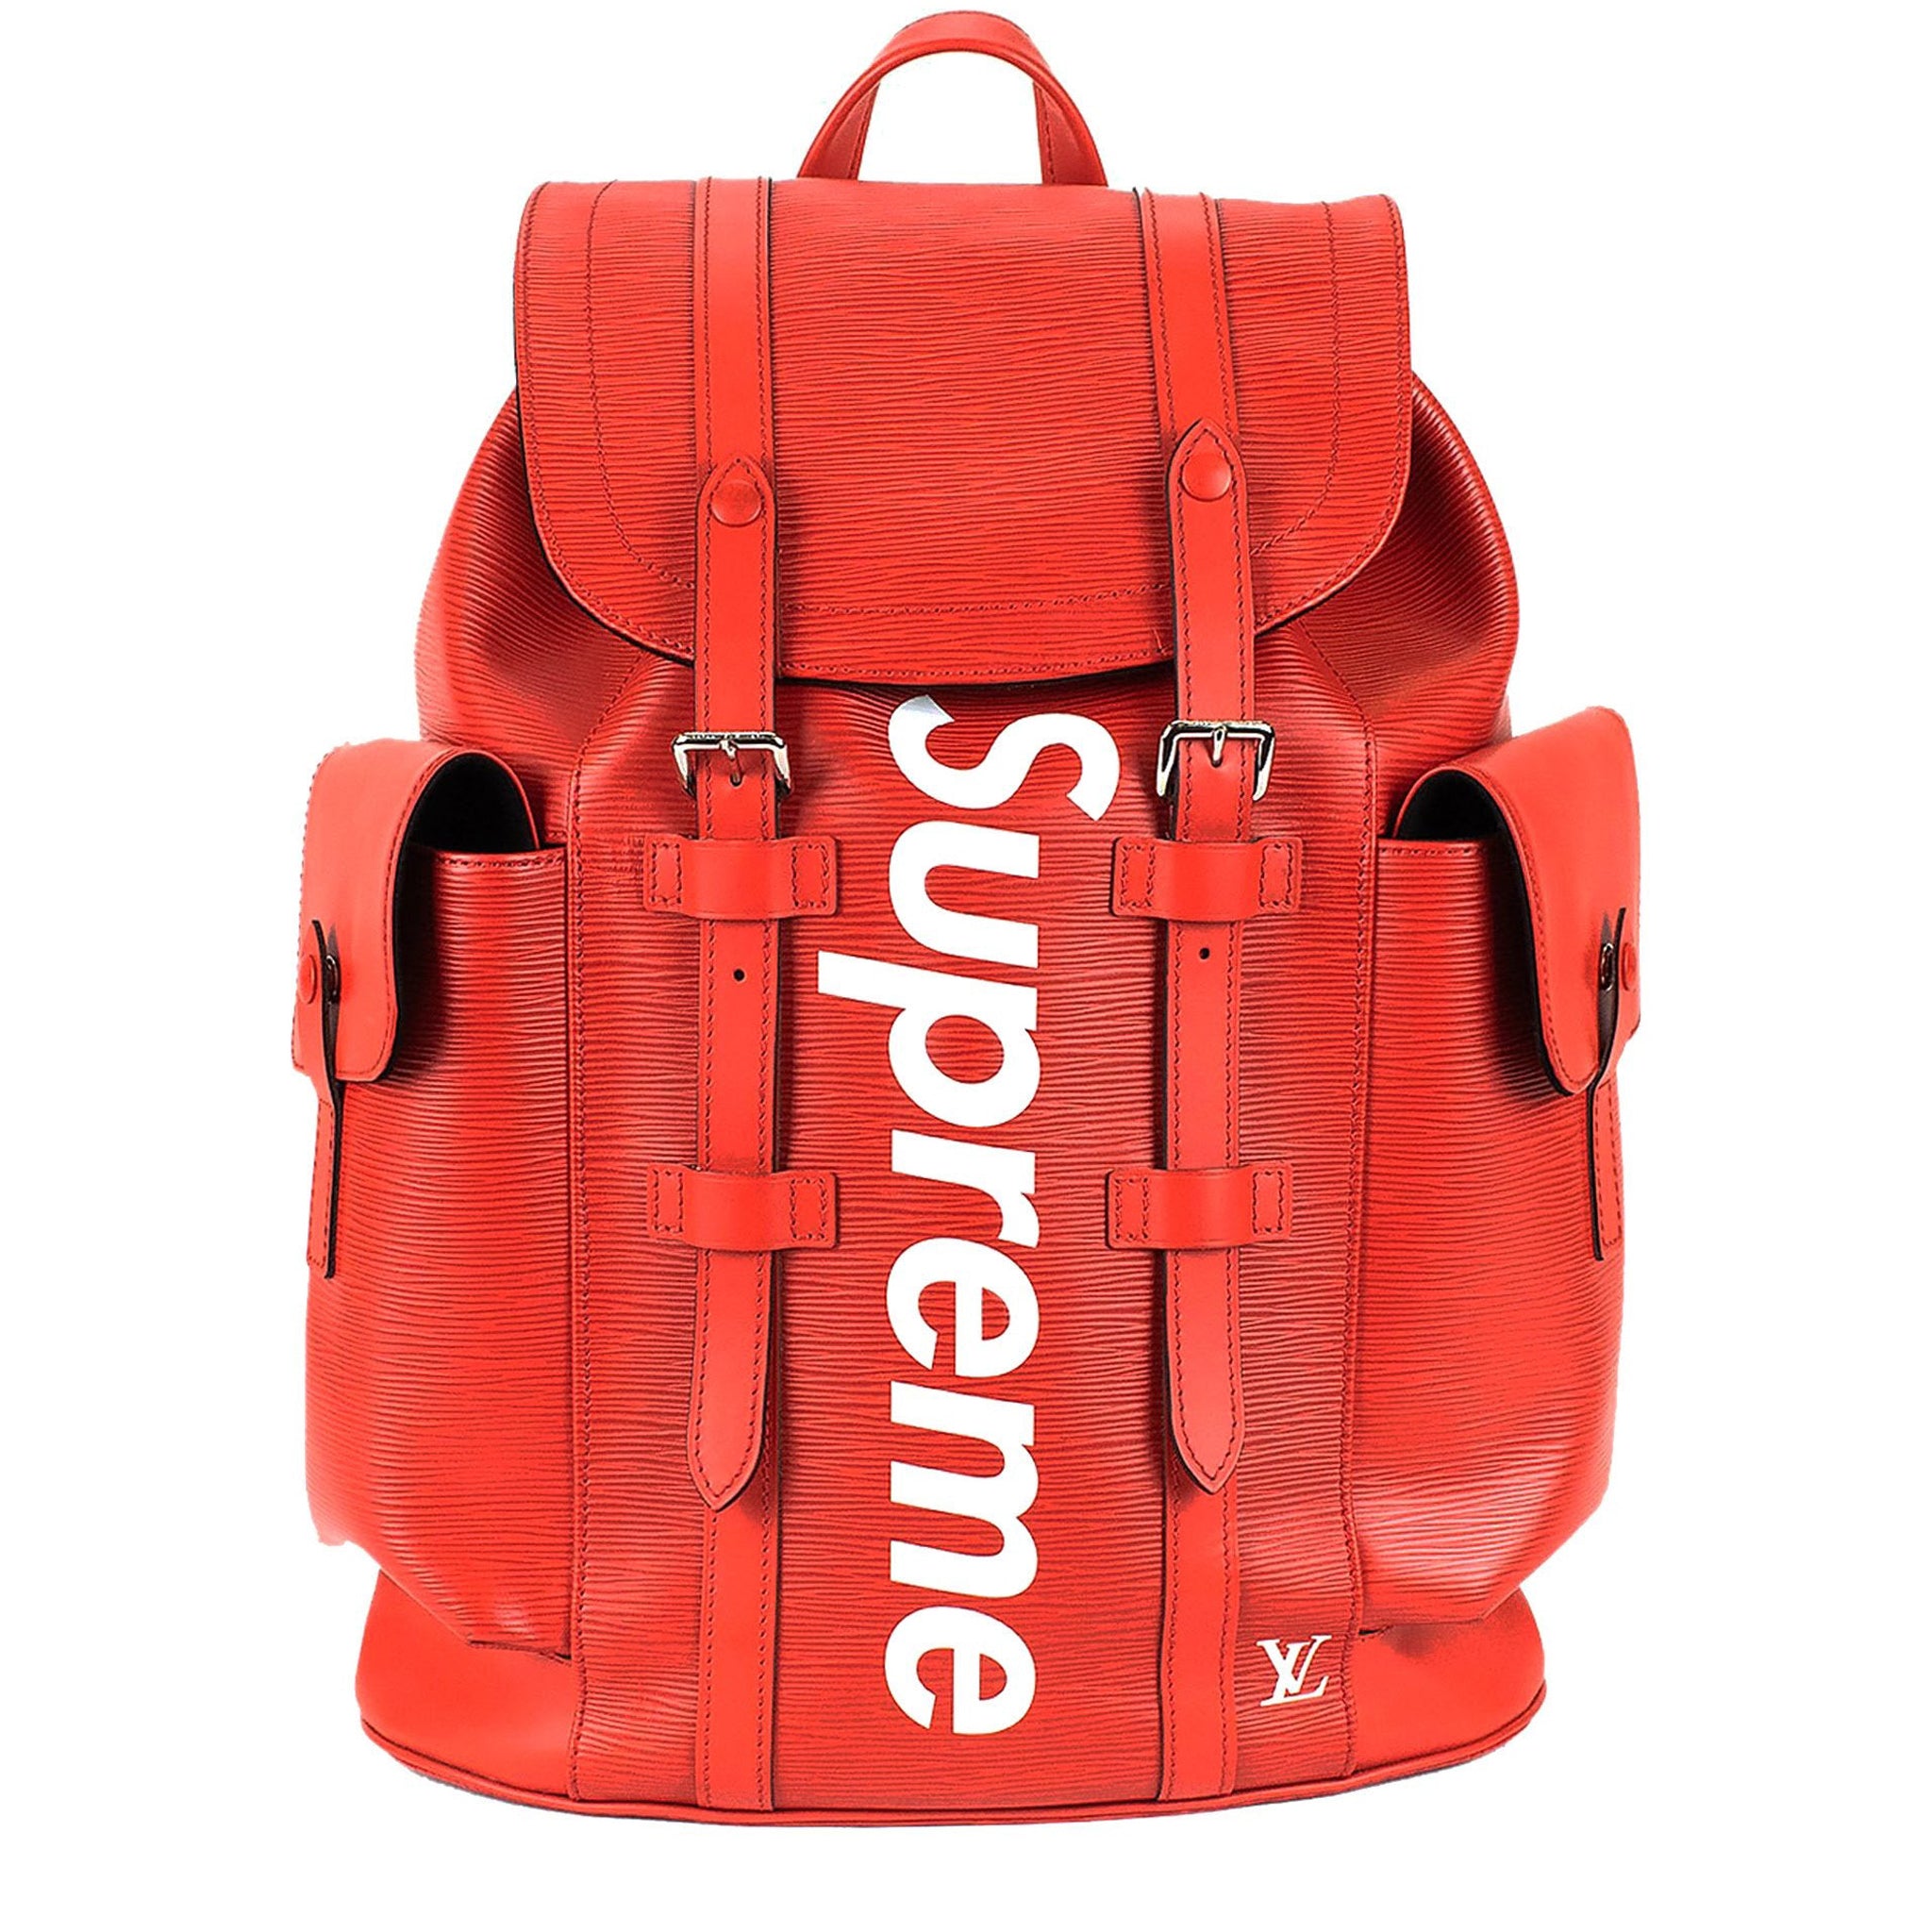 Supreme x Louis Vuitton Backpack Crepslocker